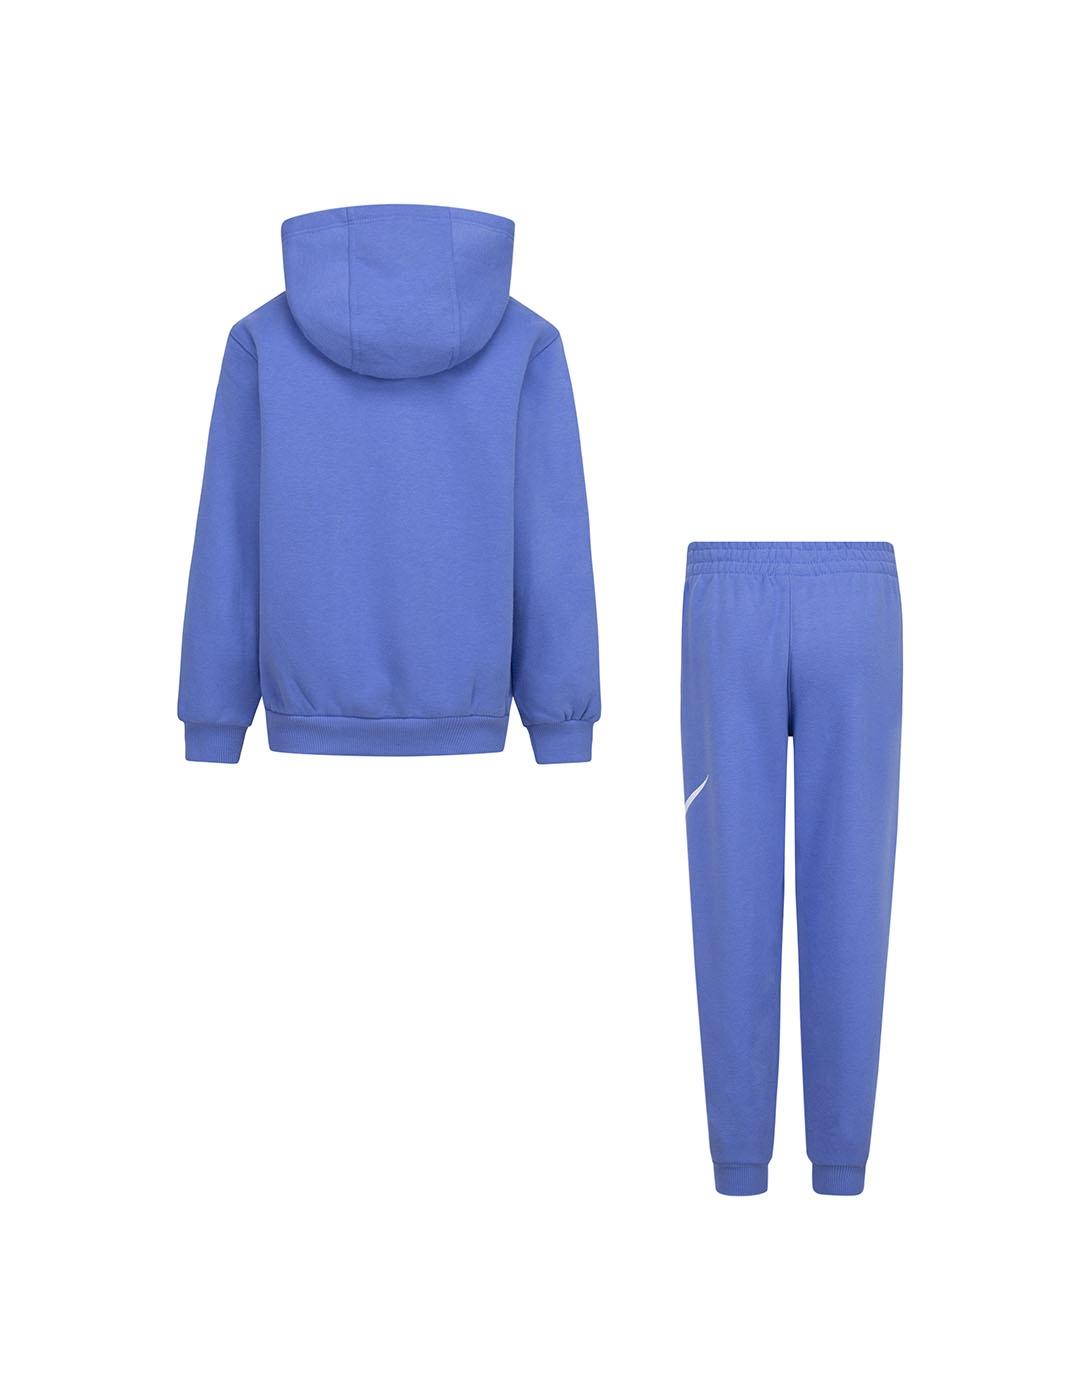 Chándal Niño Nike Fleece Set Azul Polar